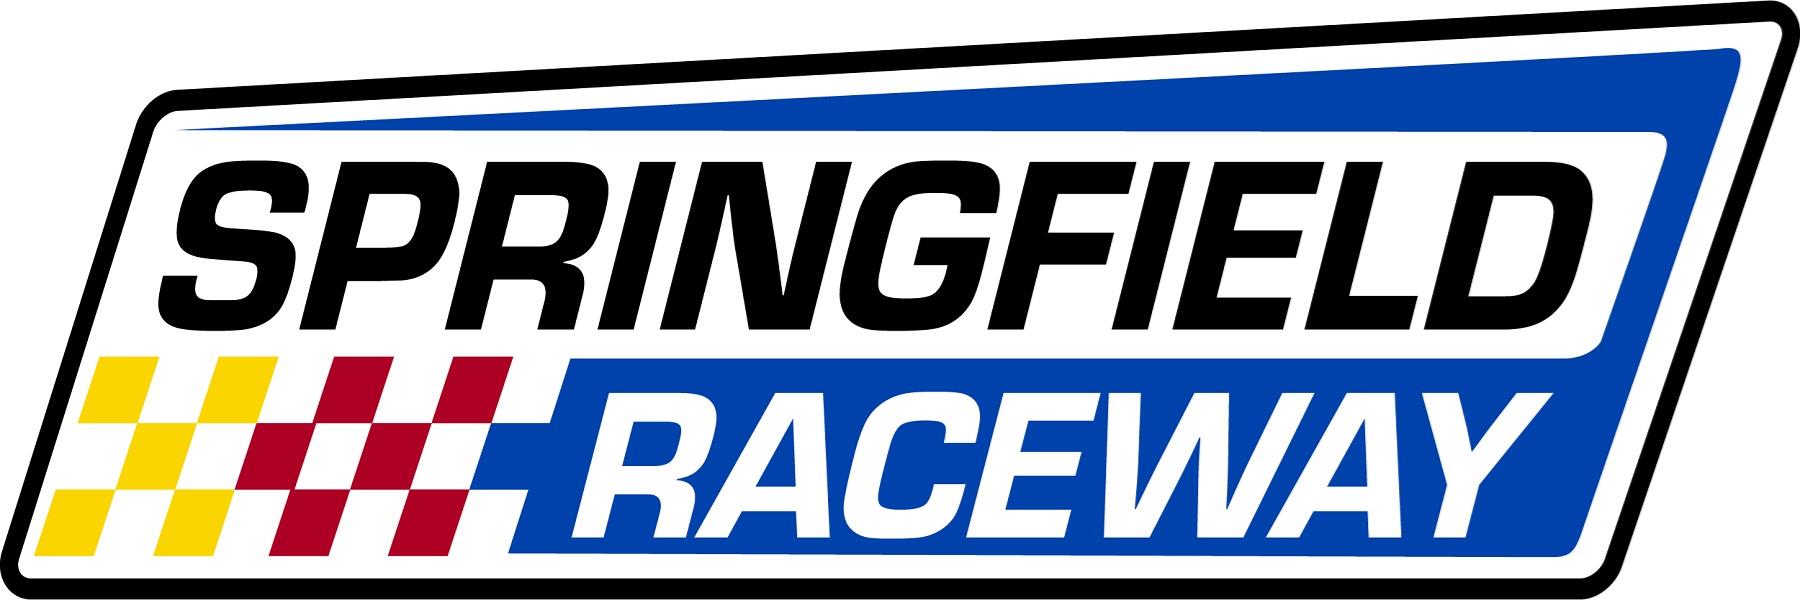 6/11/2022 - Springfield Raceway